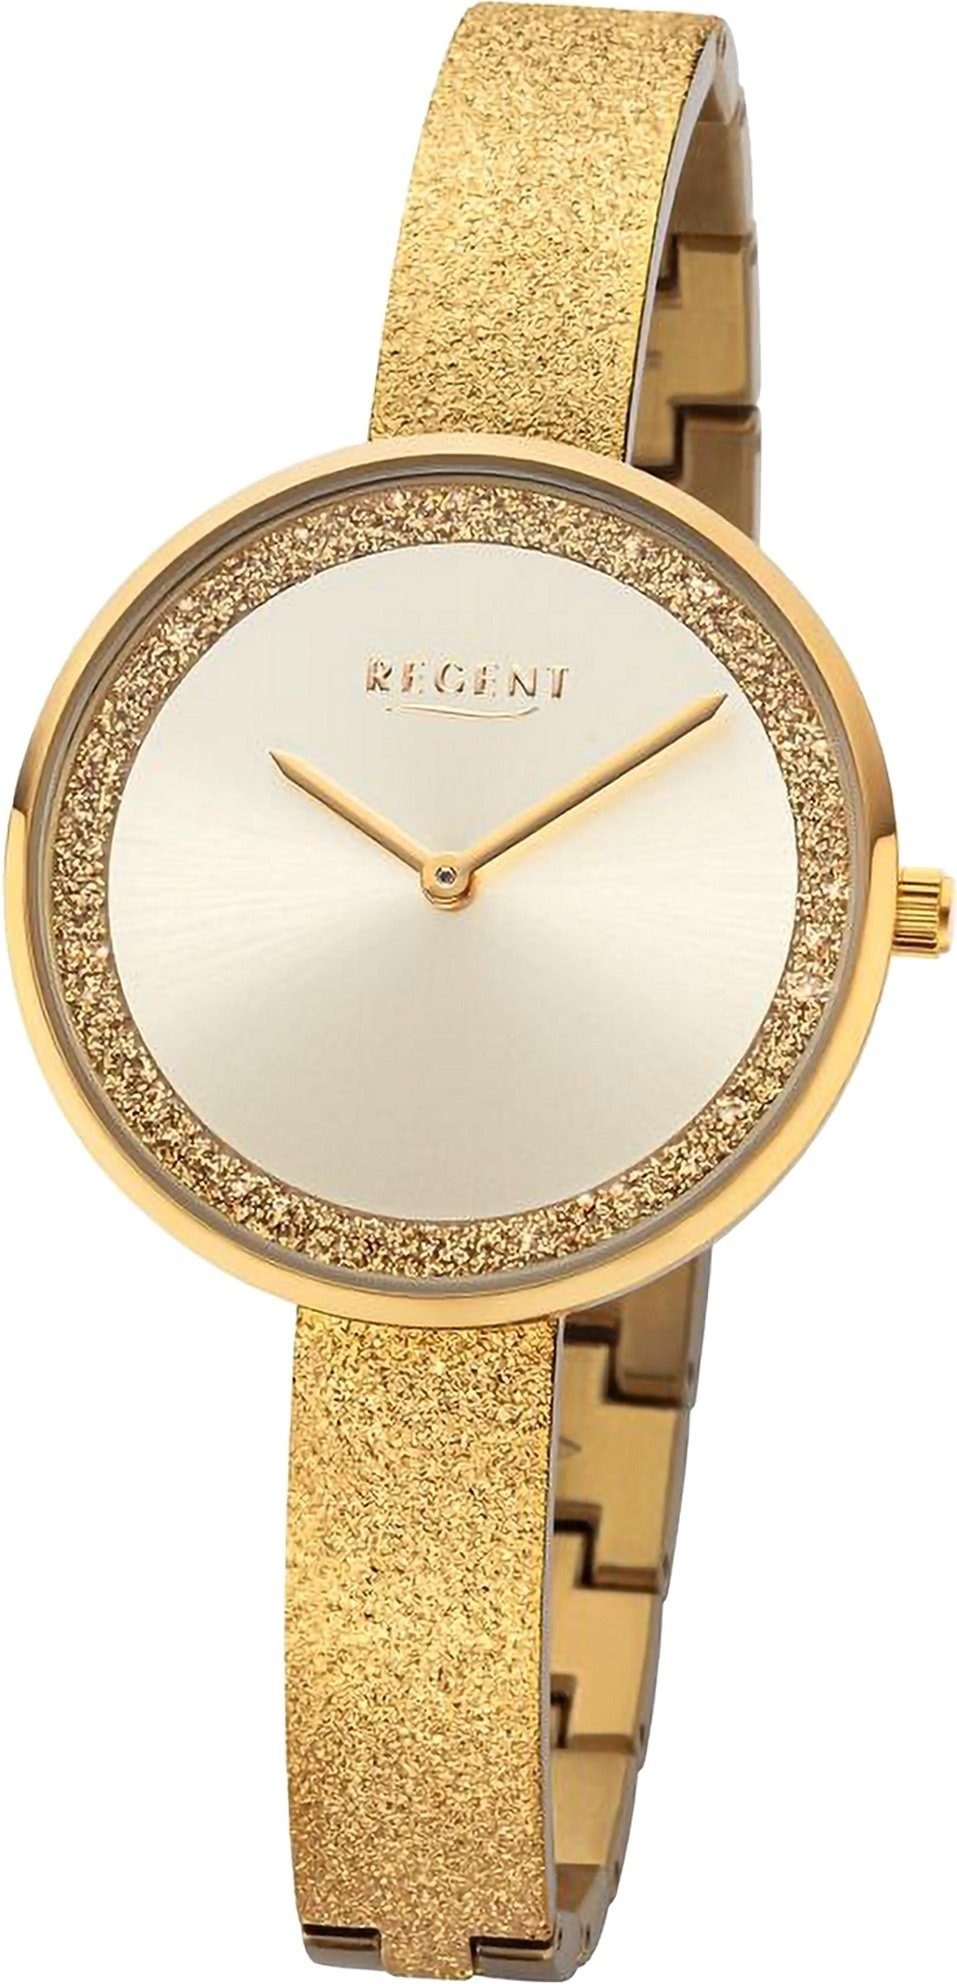 Regent Quarzuhr Regent Damen Armbanduhr Analog, Damen Armbanduhr rund, extra groß (ca. 34mm), Metallarmband